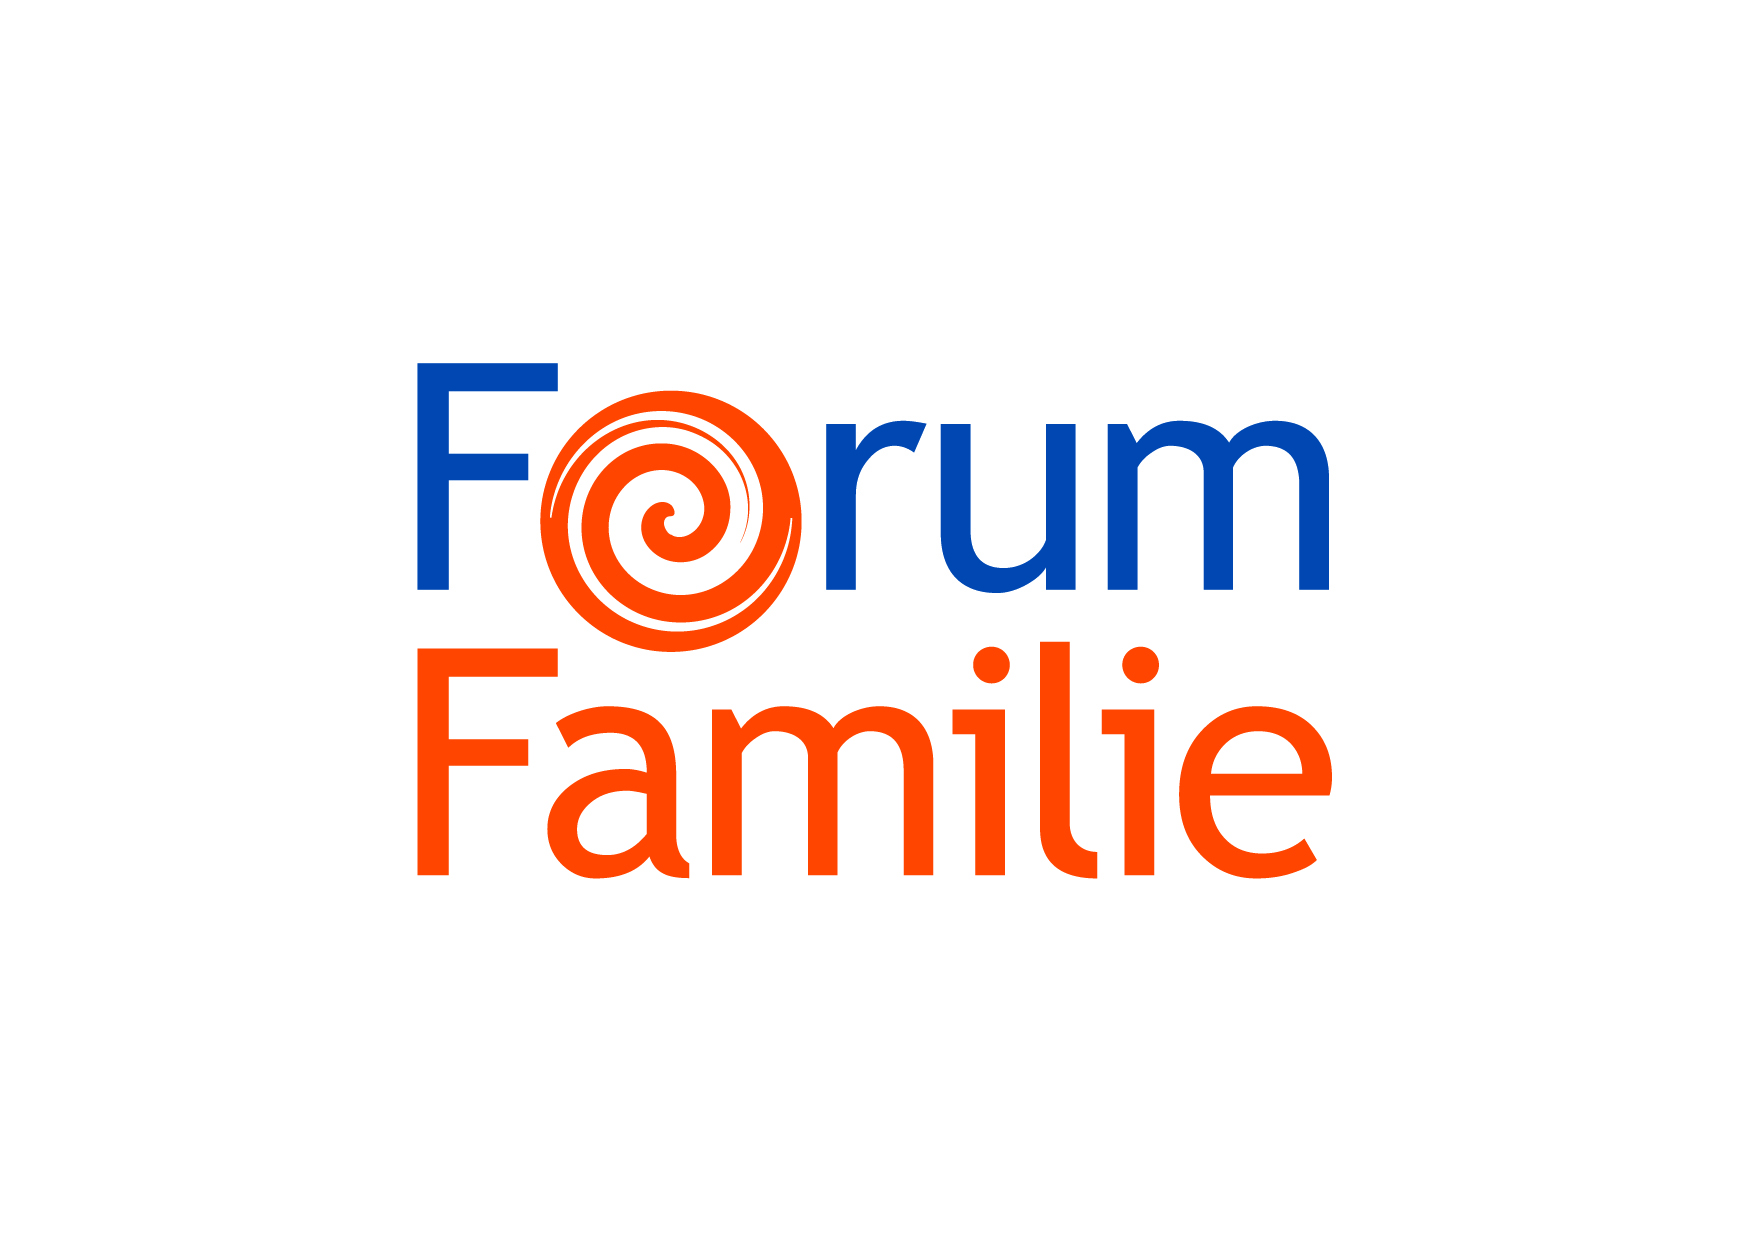 Forum Familie Logo 2020